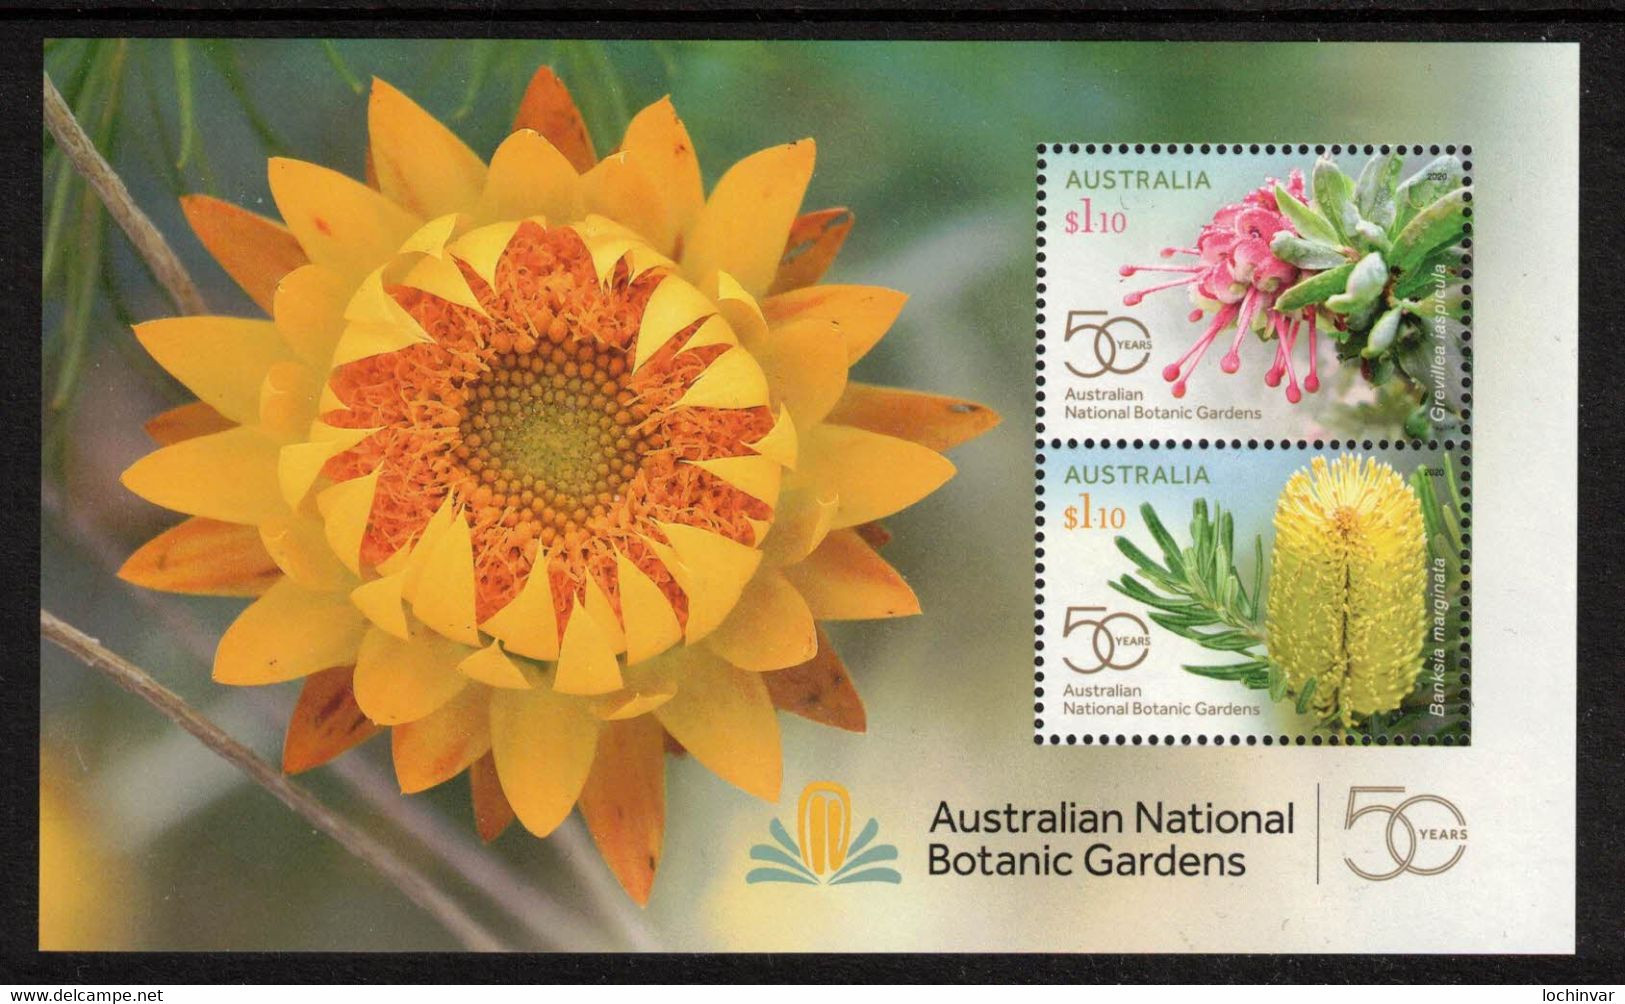 AUSTRALIA, 2020 BOTANIC GARDENS MINISHEET MNH - Mint Stamps